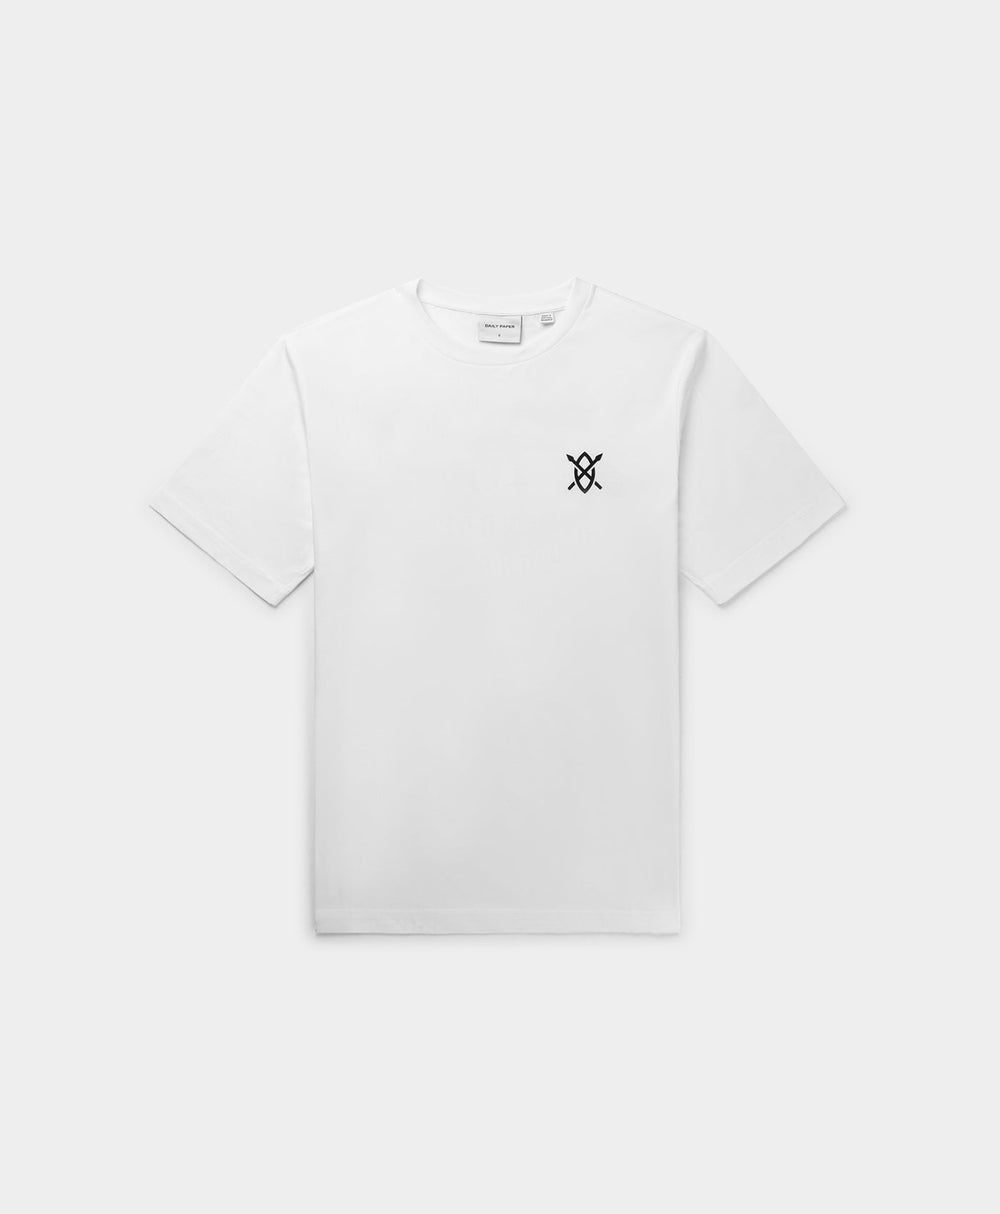 DP - White Black London Flagship Store T-Shirt - Packshot - Rear